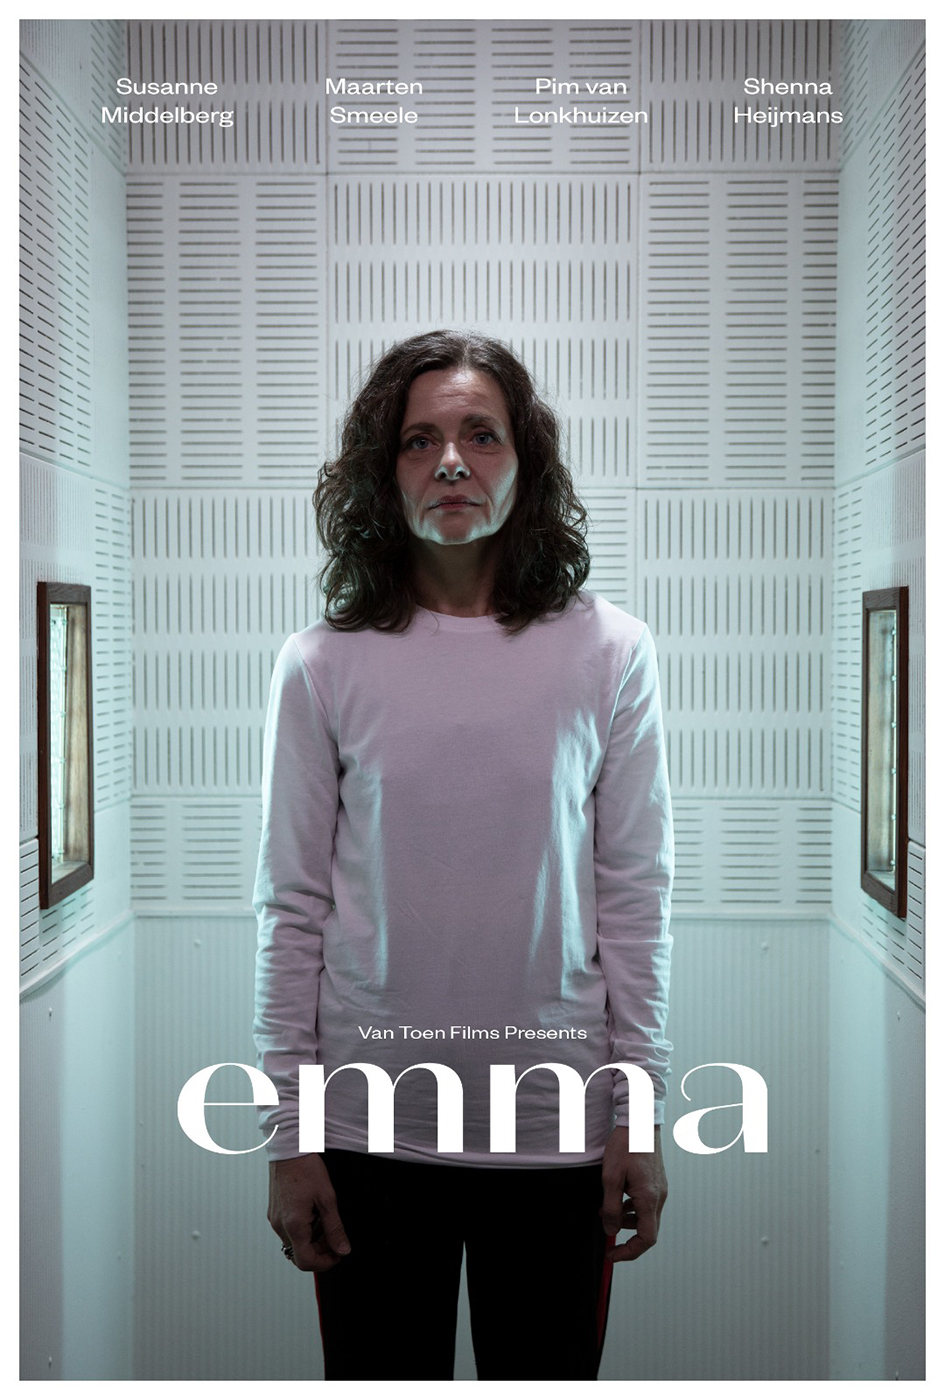 Affiche for Emma